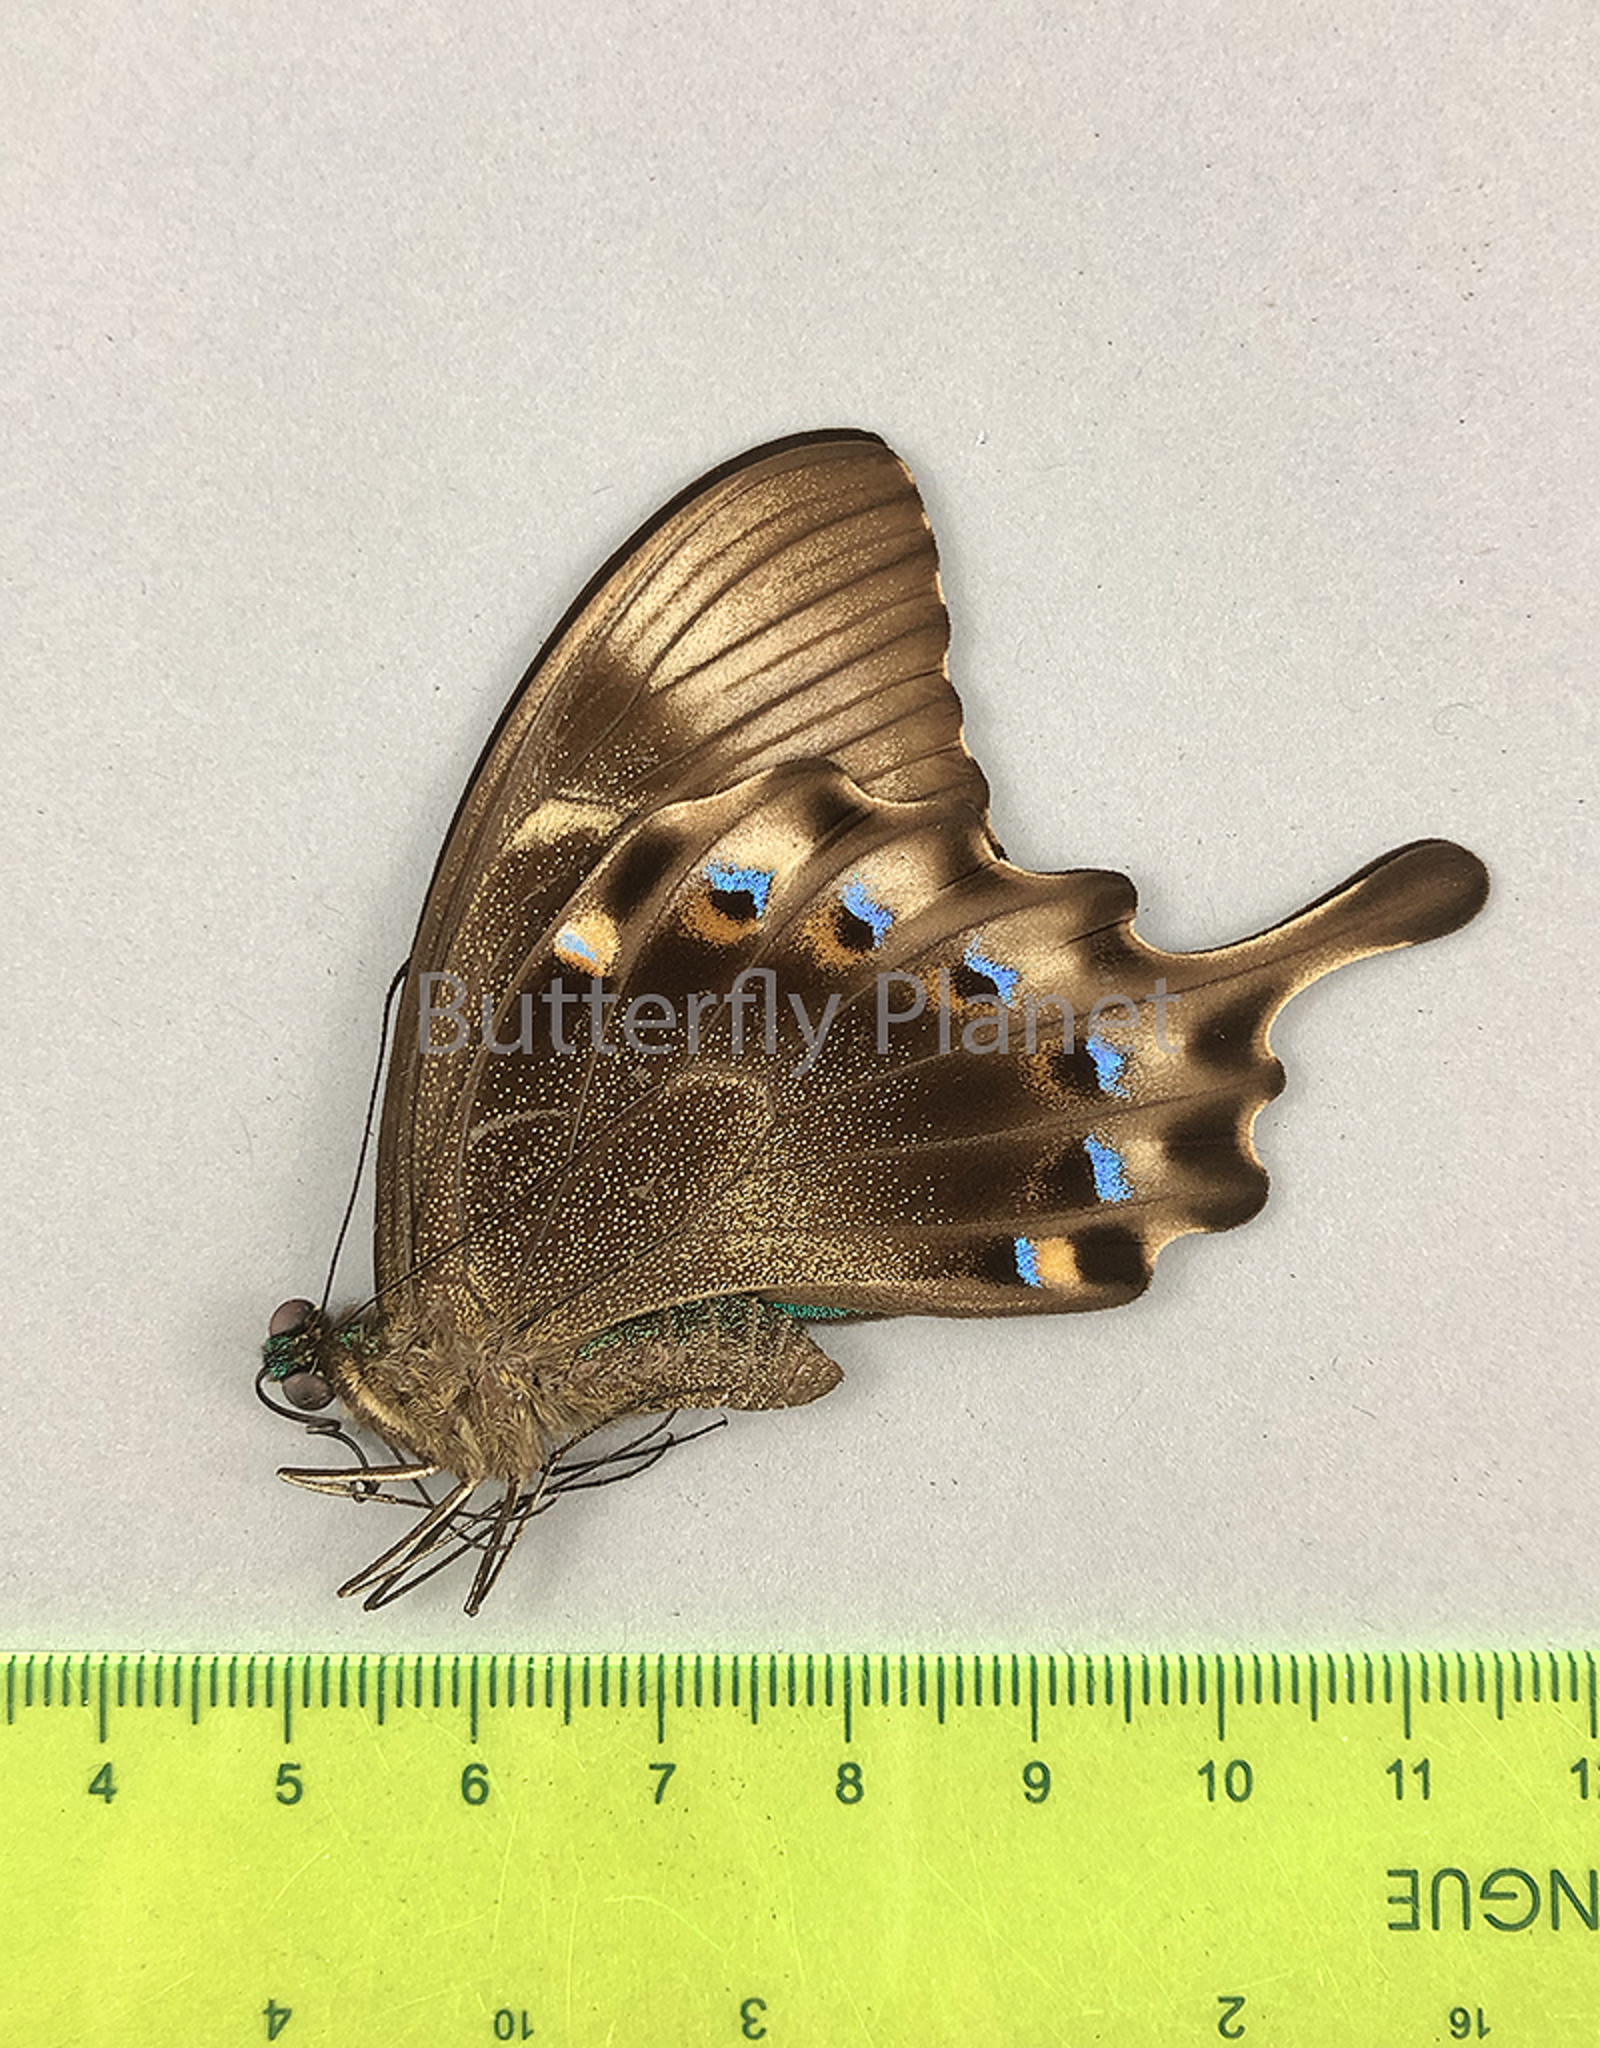 Papilio lorquinianus gelia M A1 Bachan, Isl., Indonesia